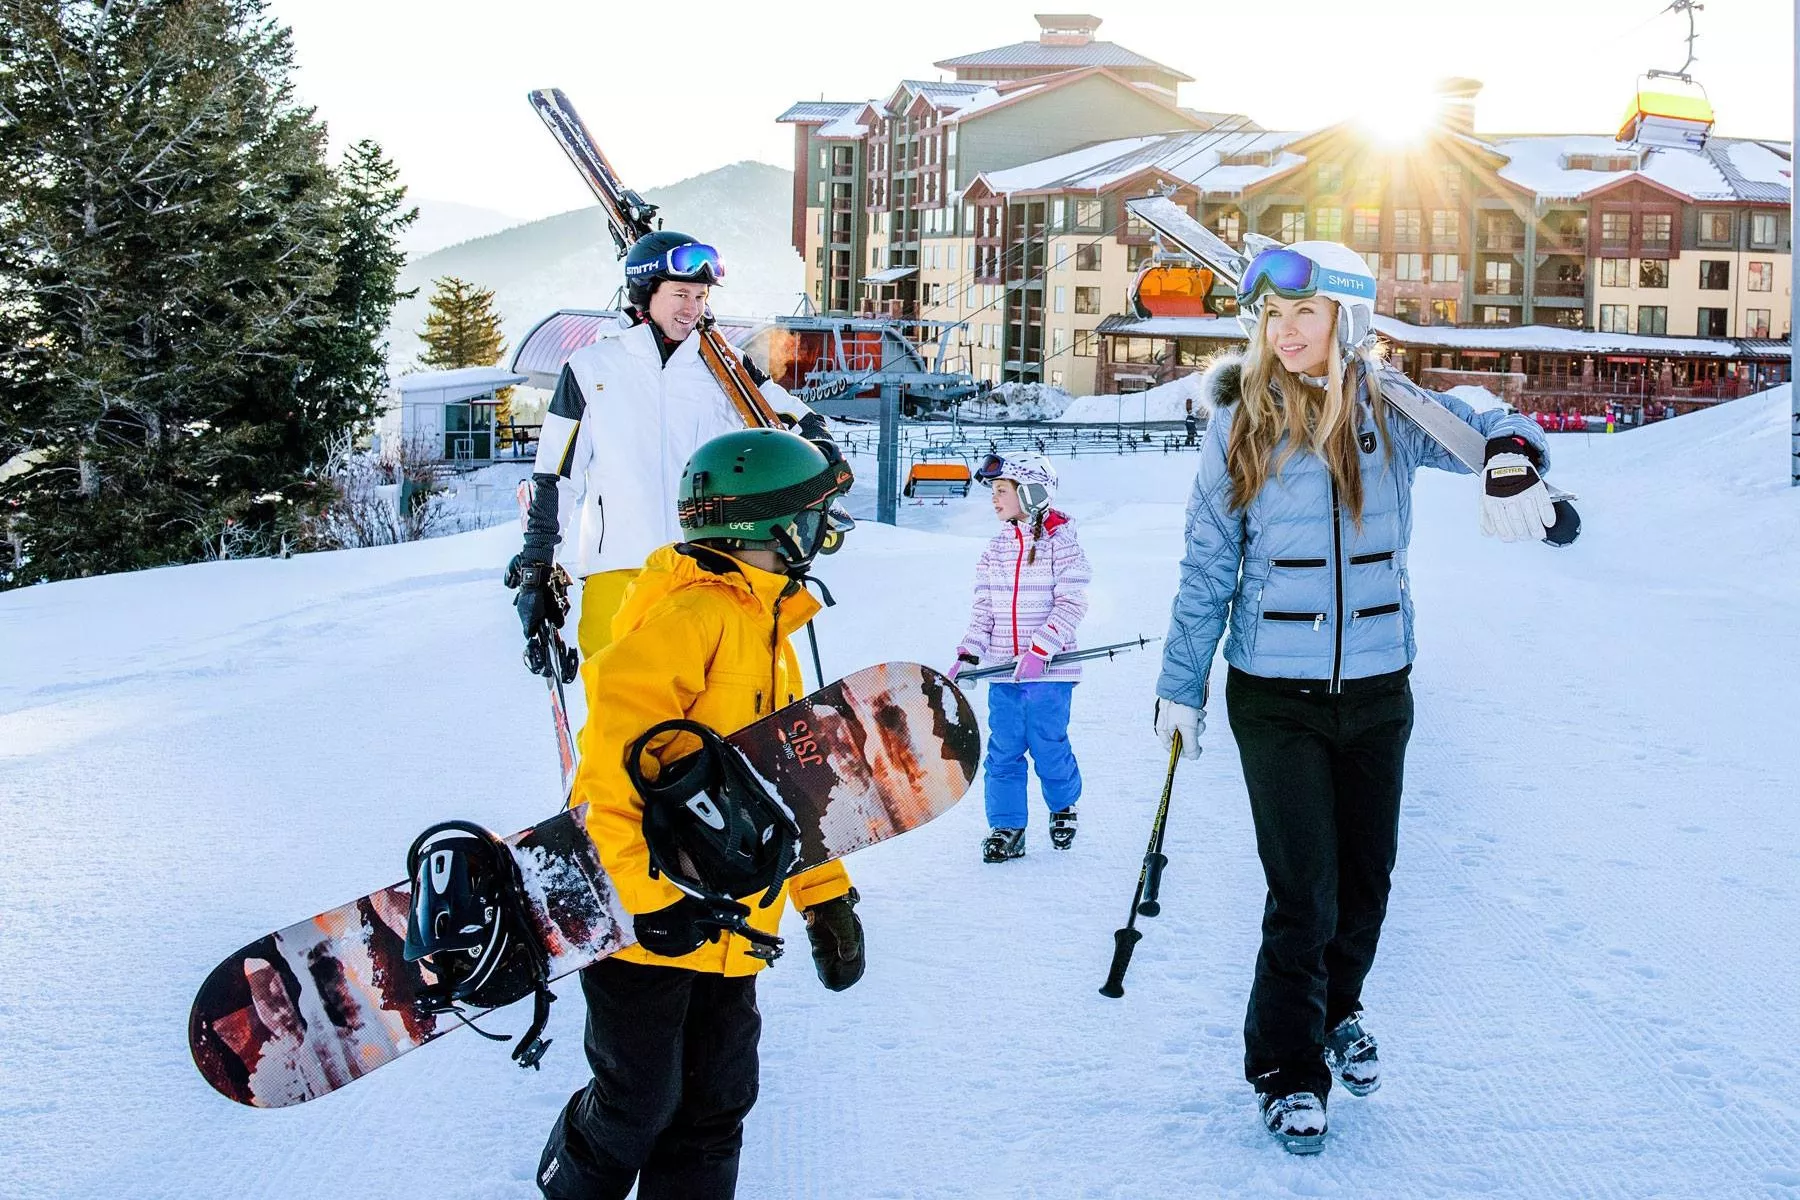 Hemsetunet Estate AS in Norway, Europe | Snowboarding,Skiing - Rated 0.8